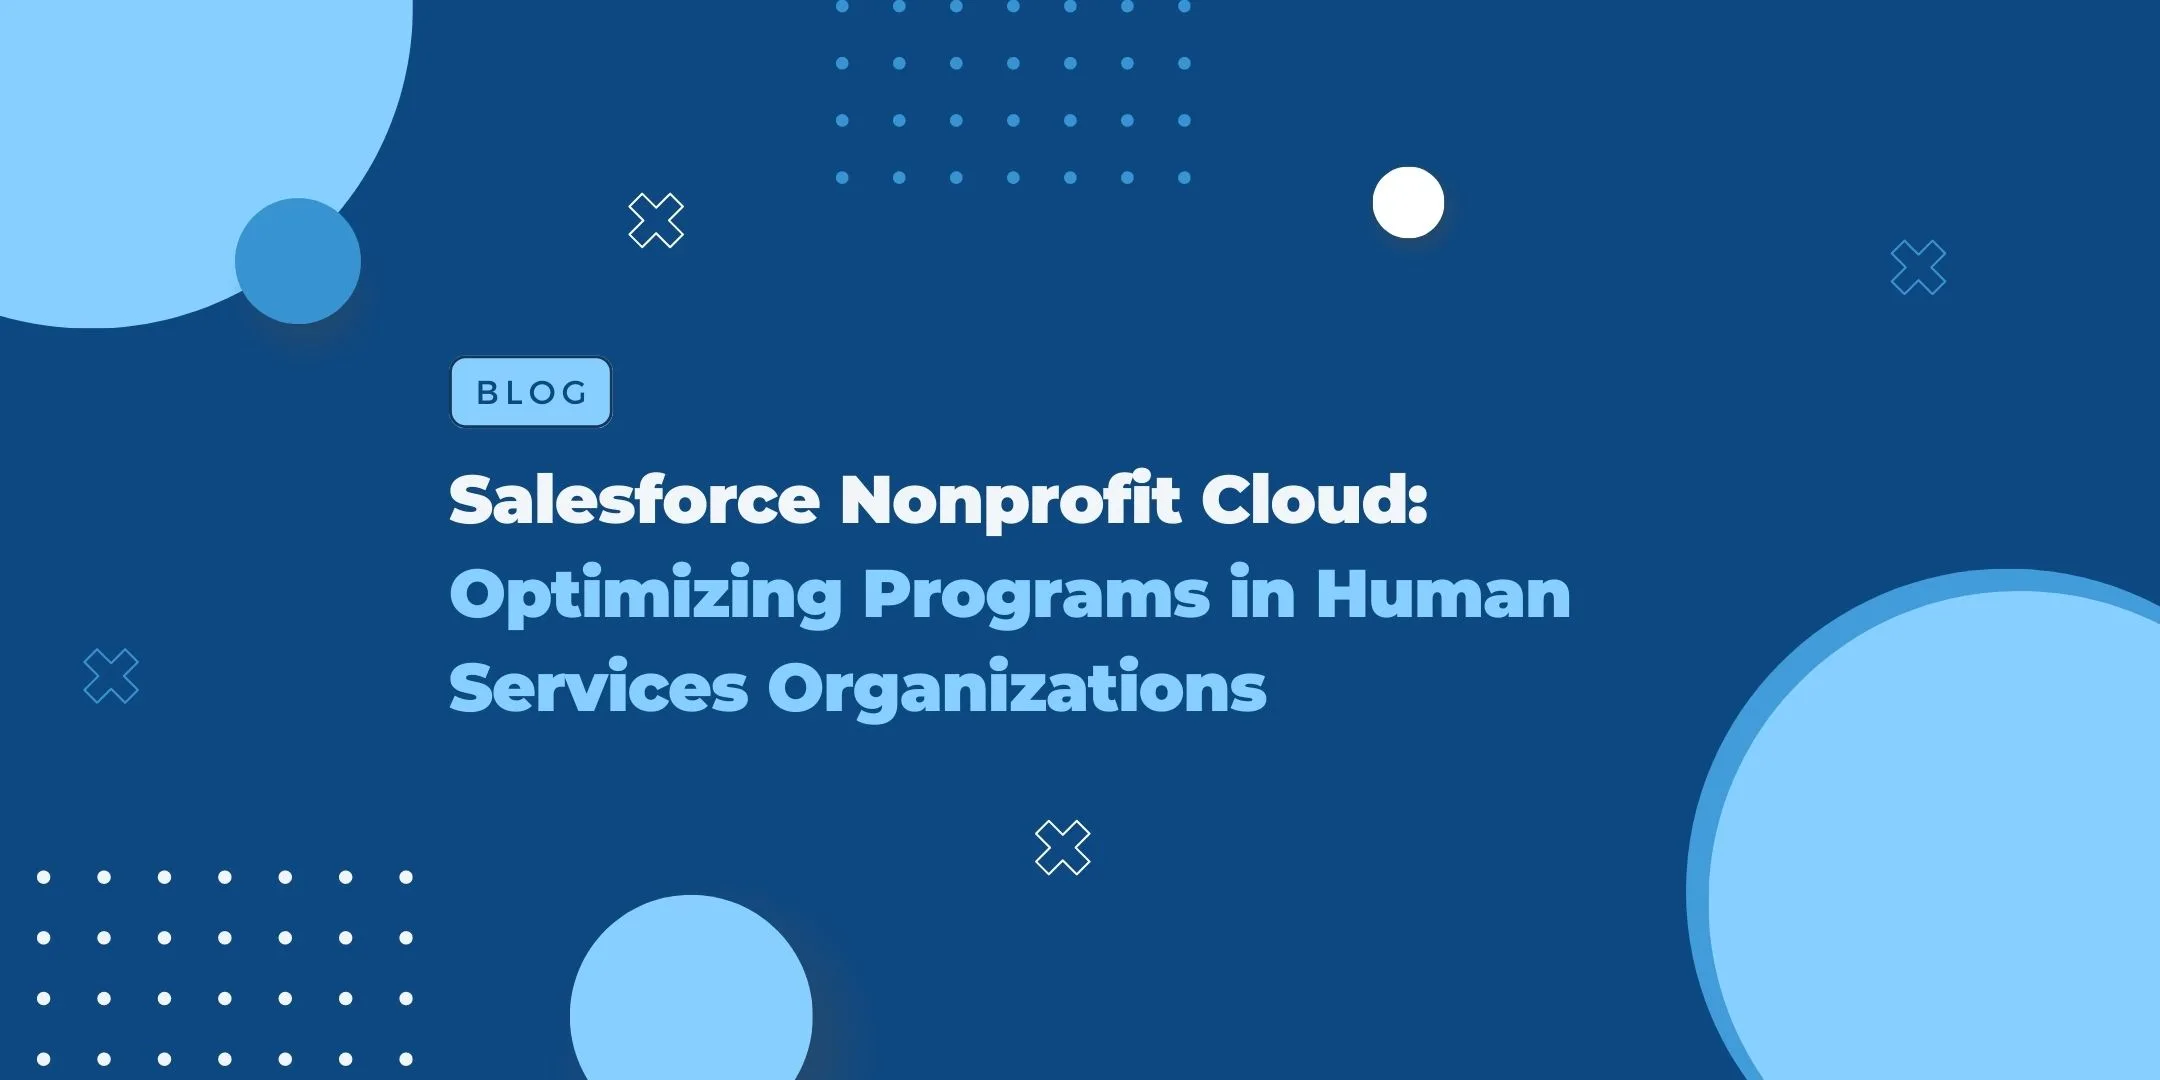 Salesforce Nonprofit Cloud: Optimizing Programs in Human Services Organizations